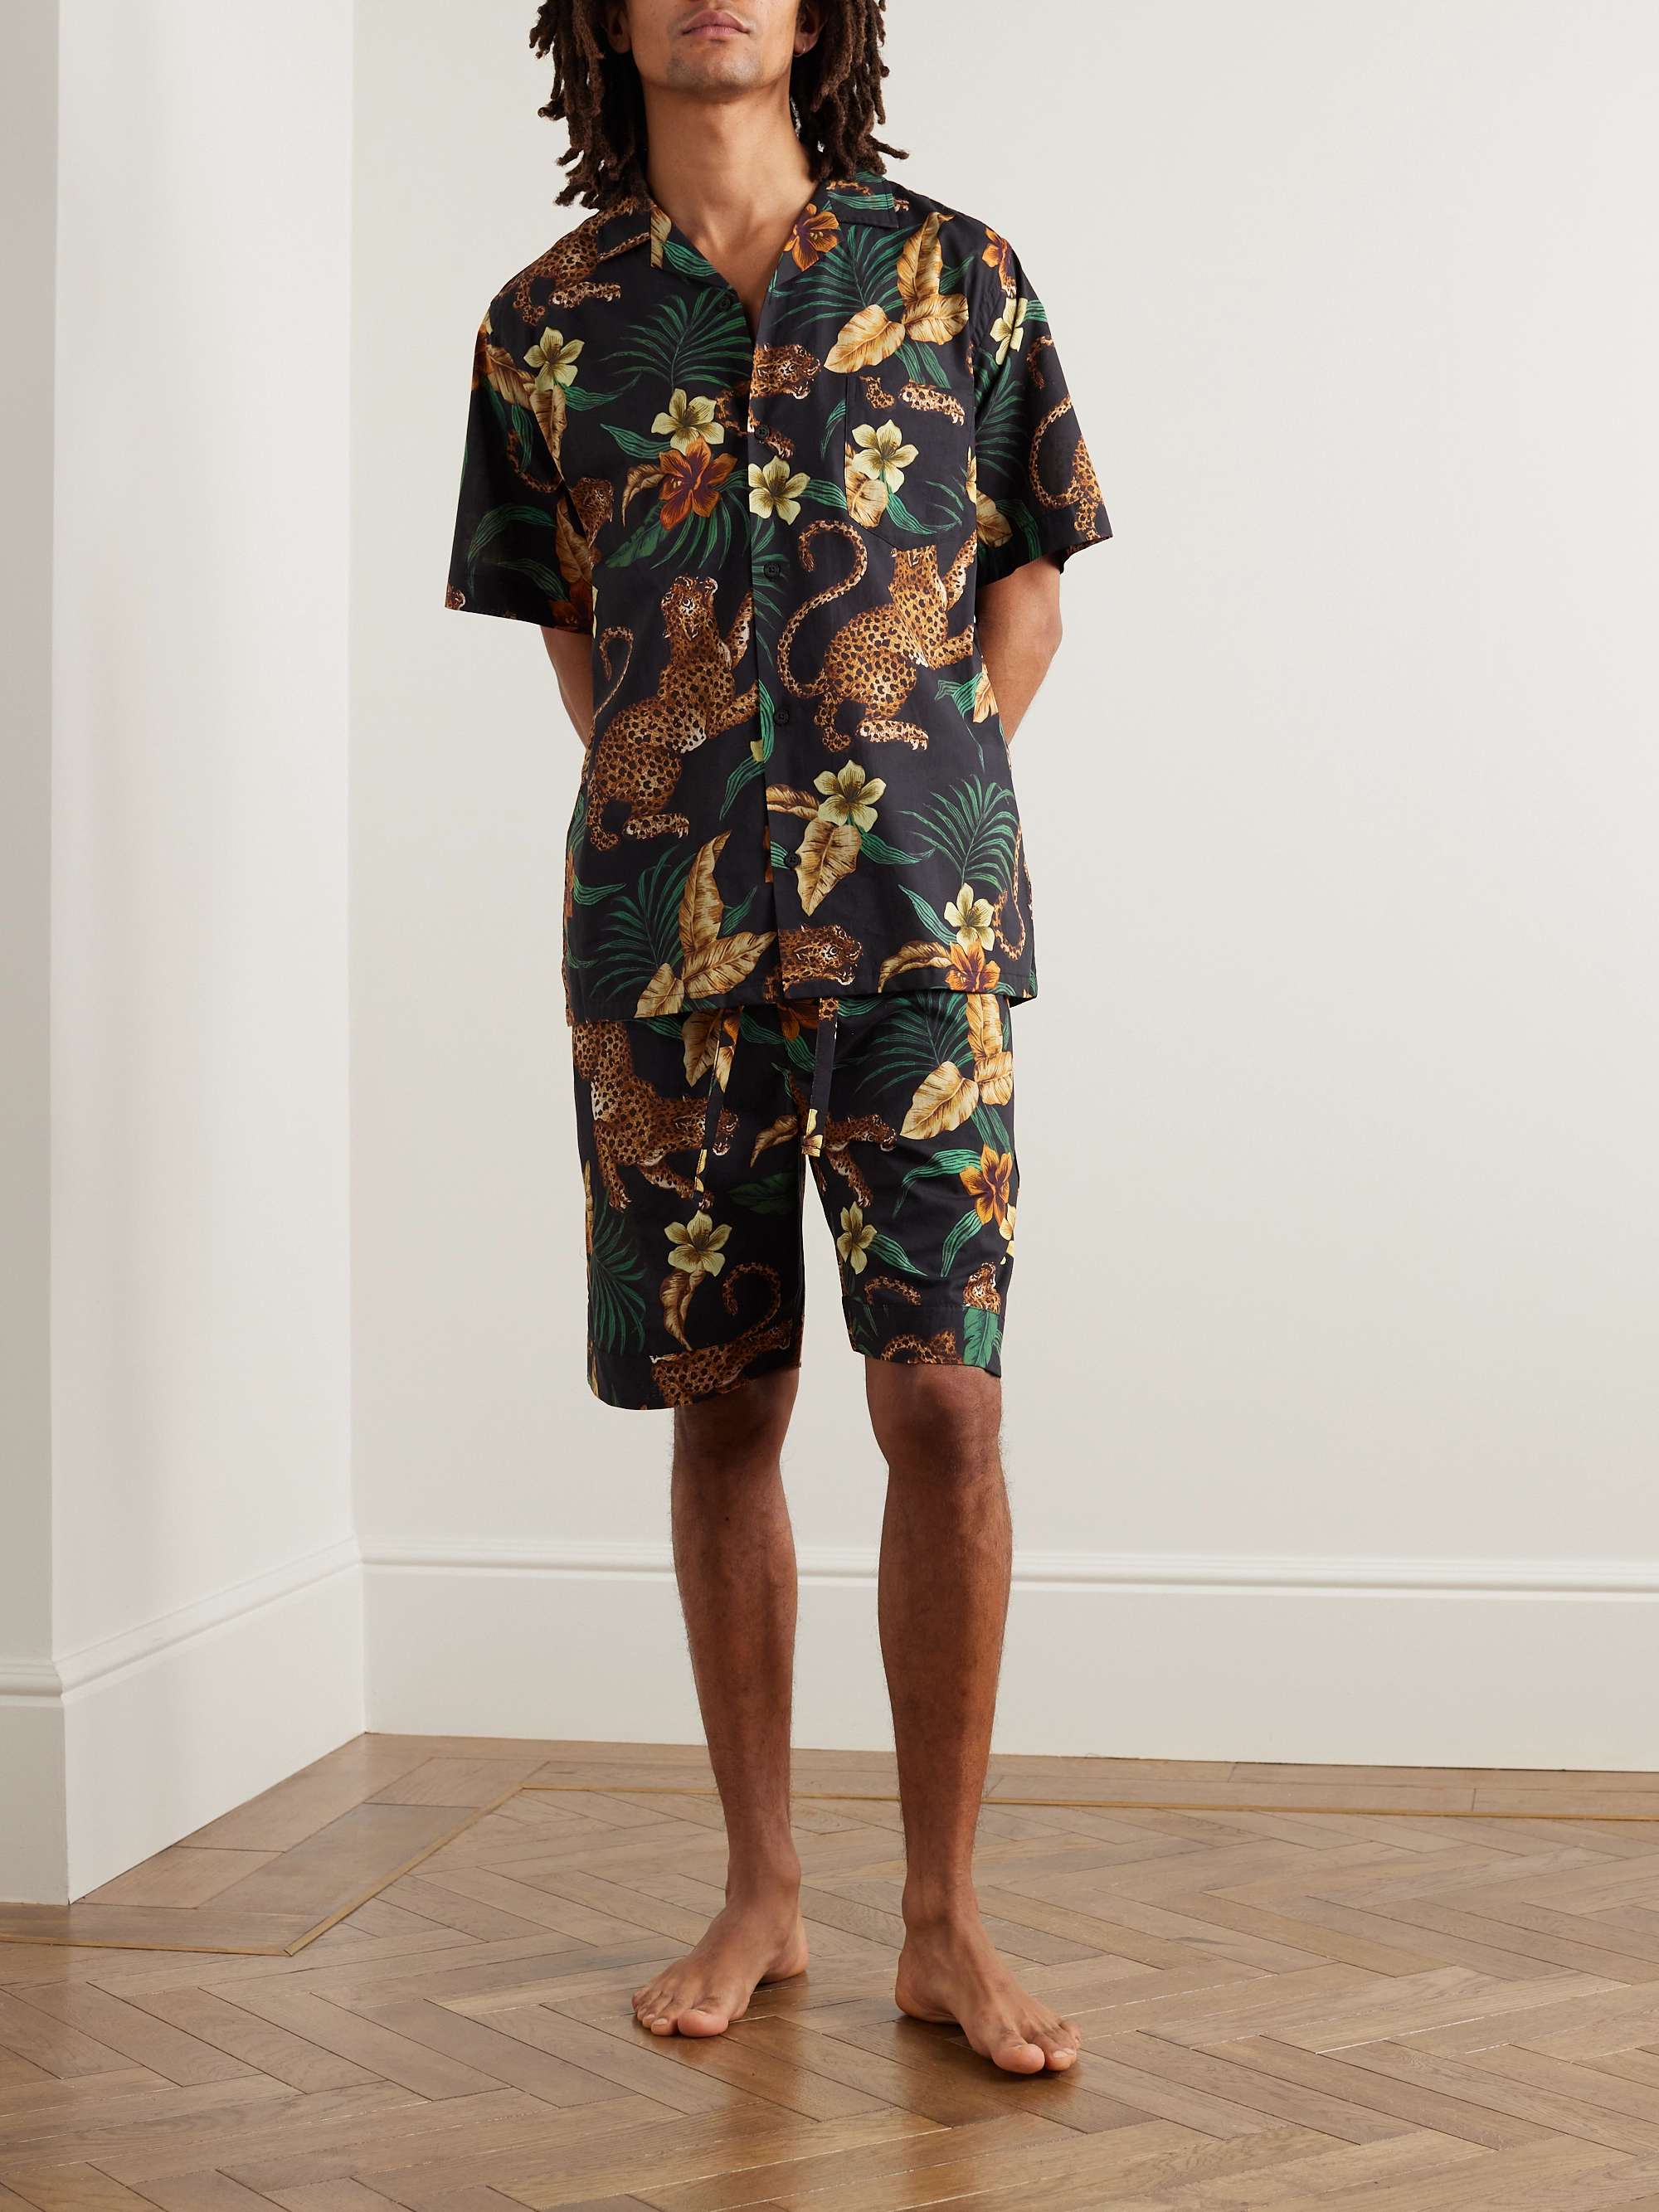 DESMOND & DEMPSEY Printed Cotton Pyjama Set for Men | MR PORTER